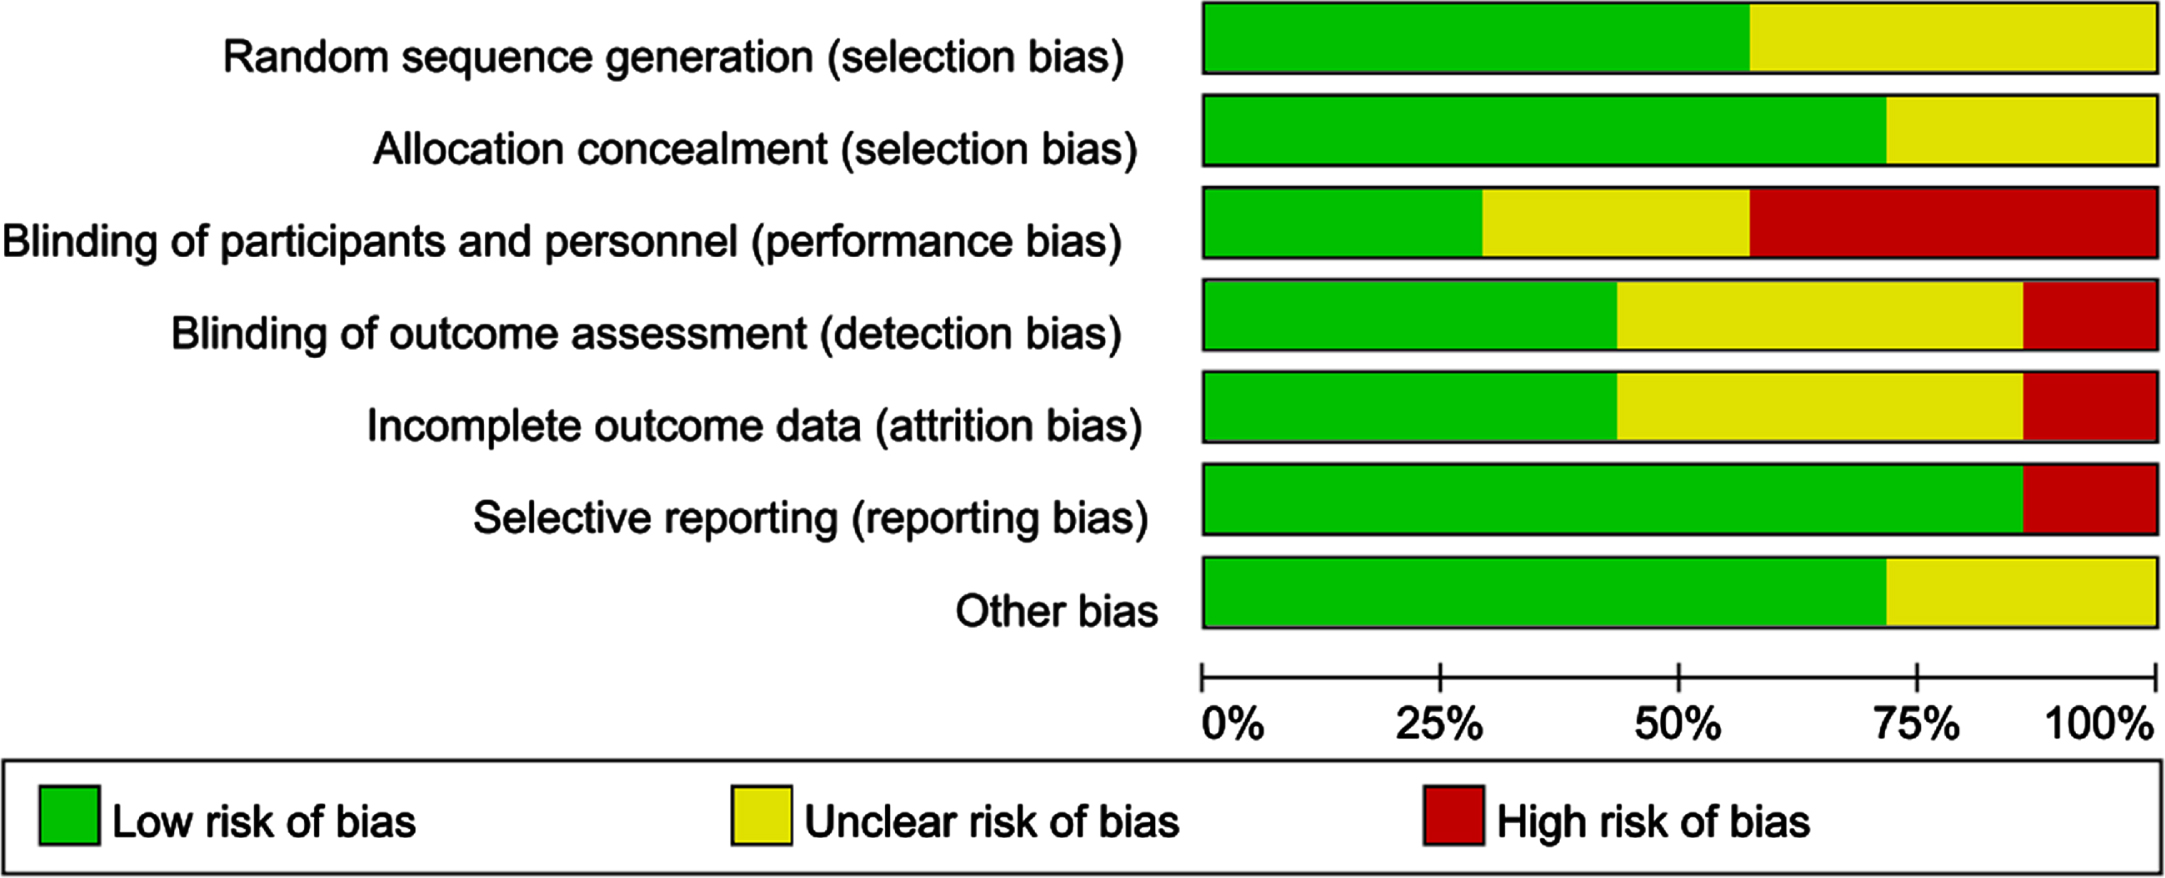 Risk of bias in trials of each item.